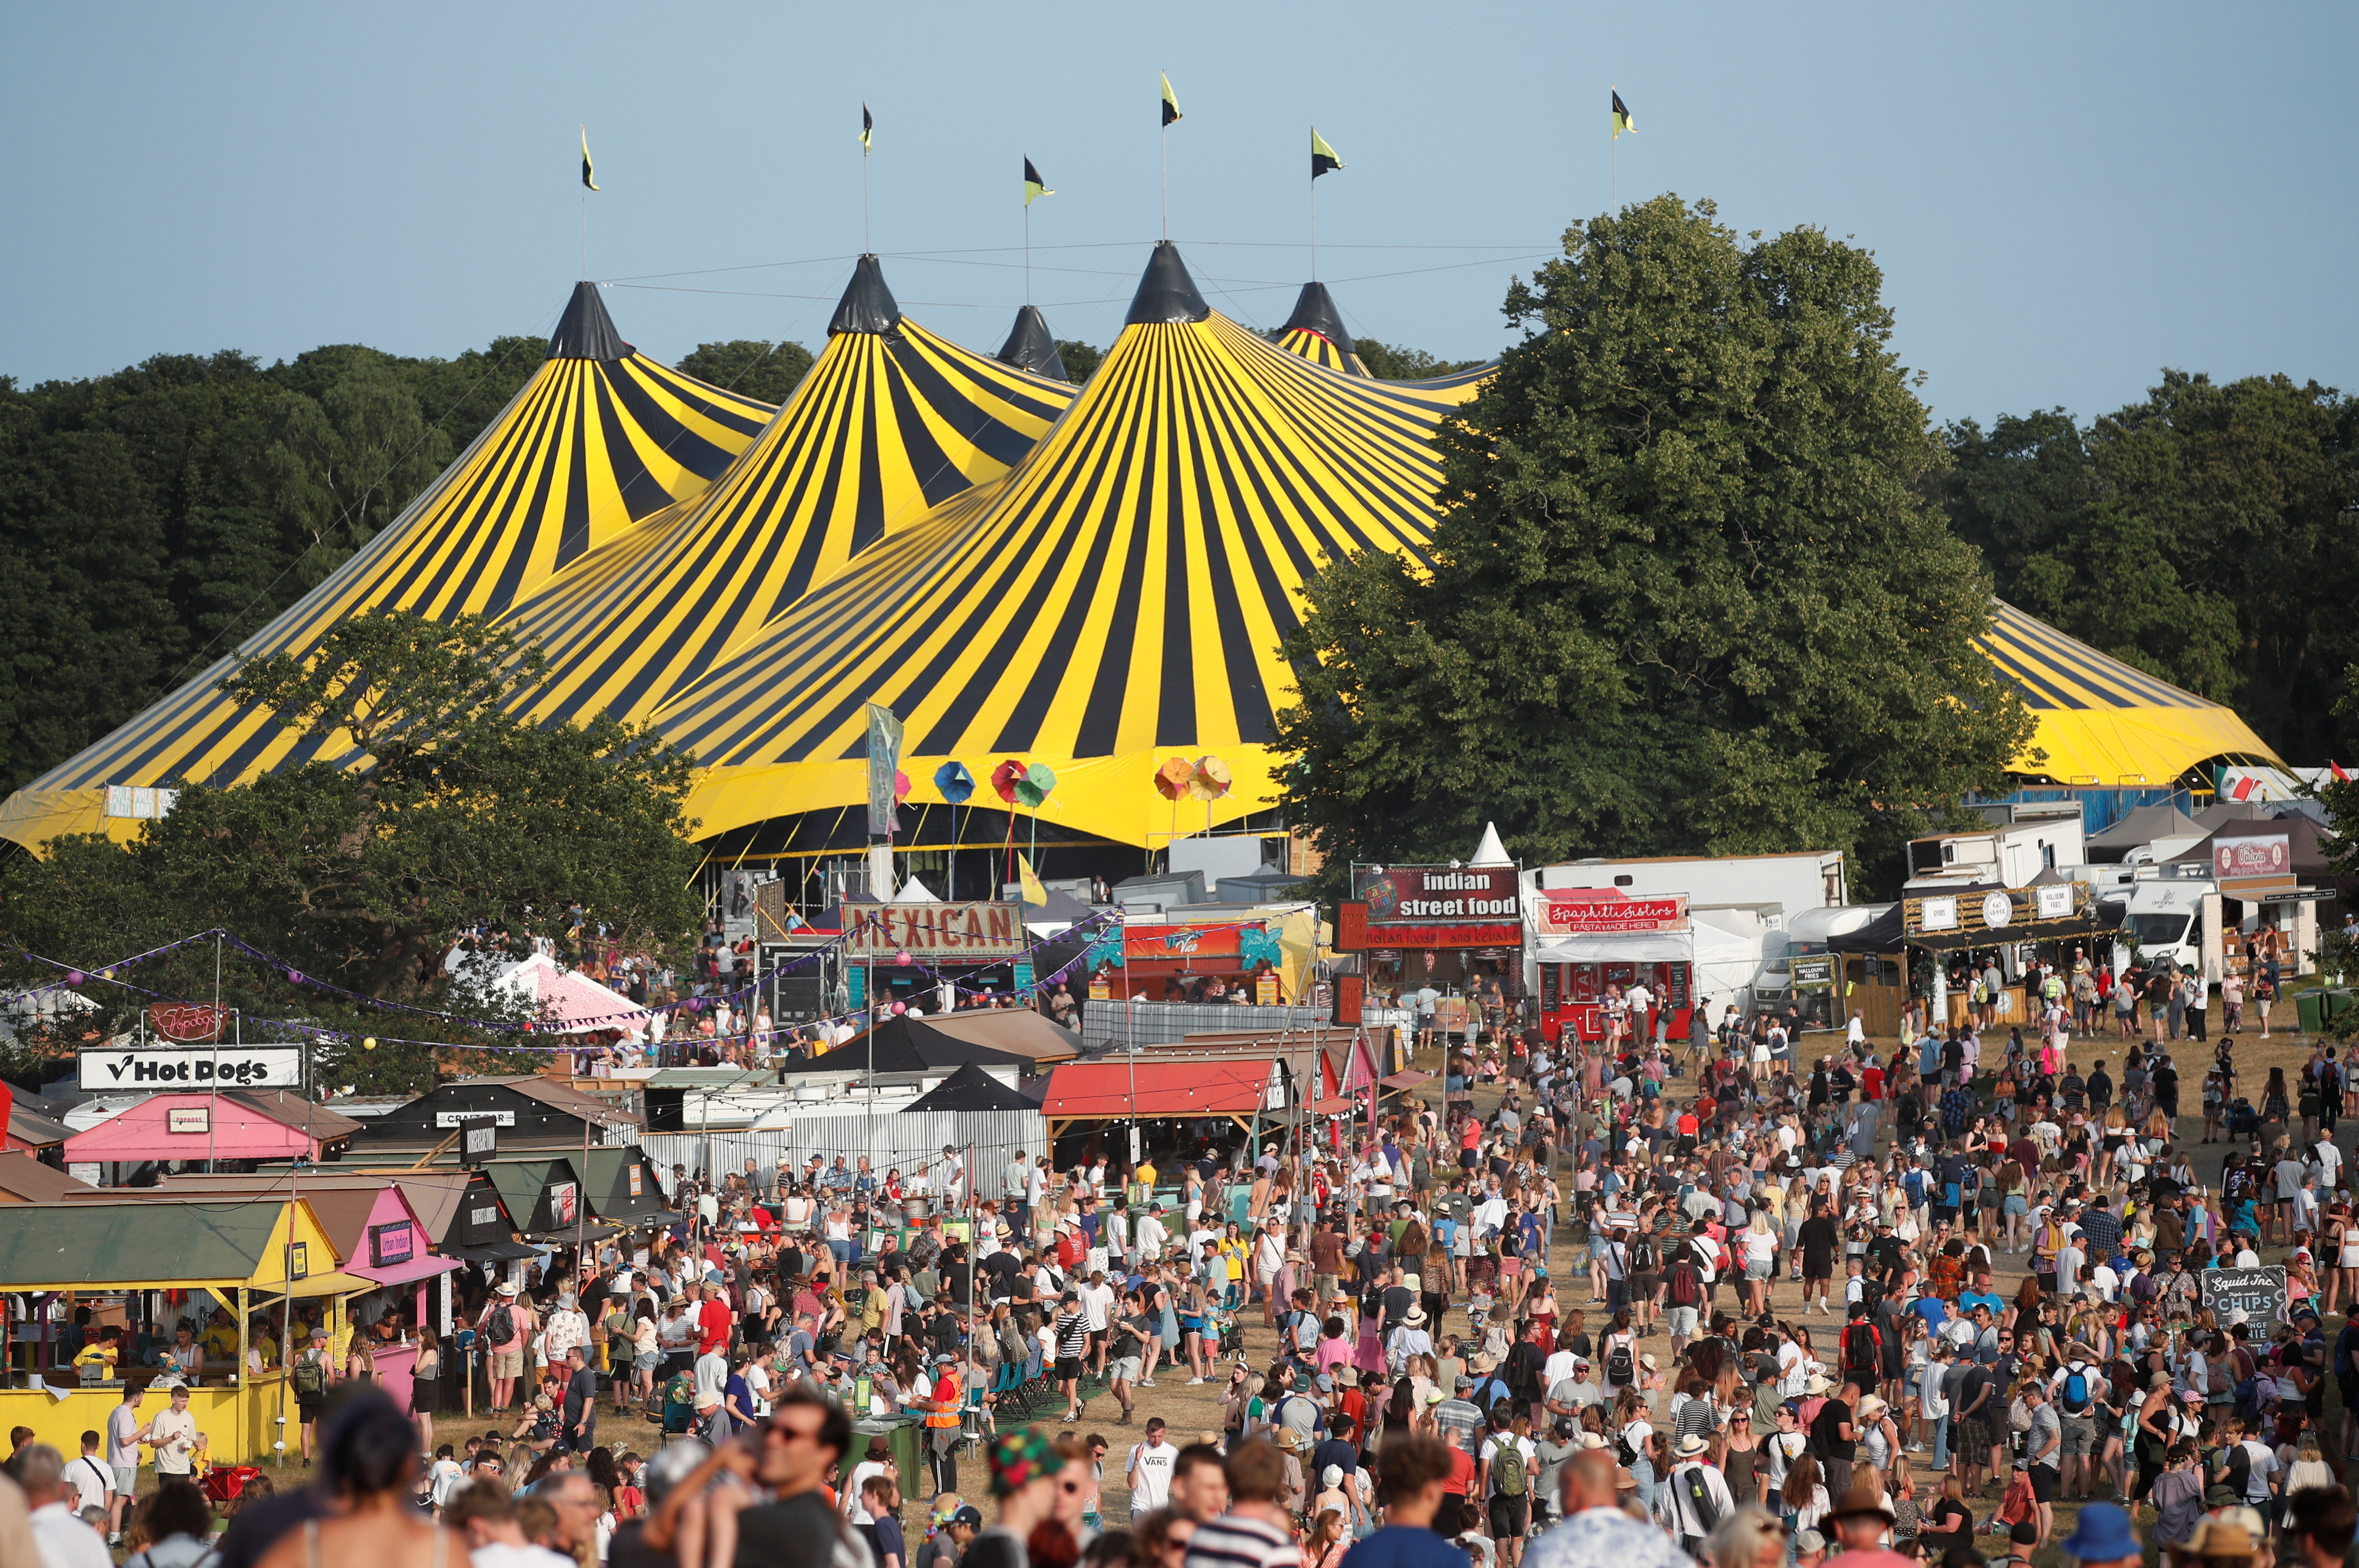 Festivalgoers enjoy the weather and stalls at Latitude Festival at Henham Park